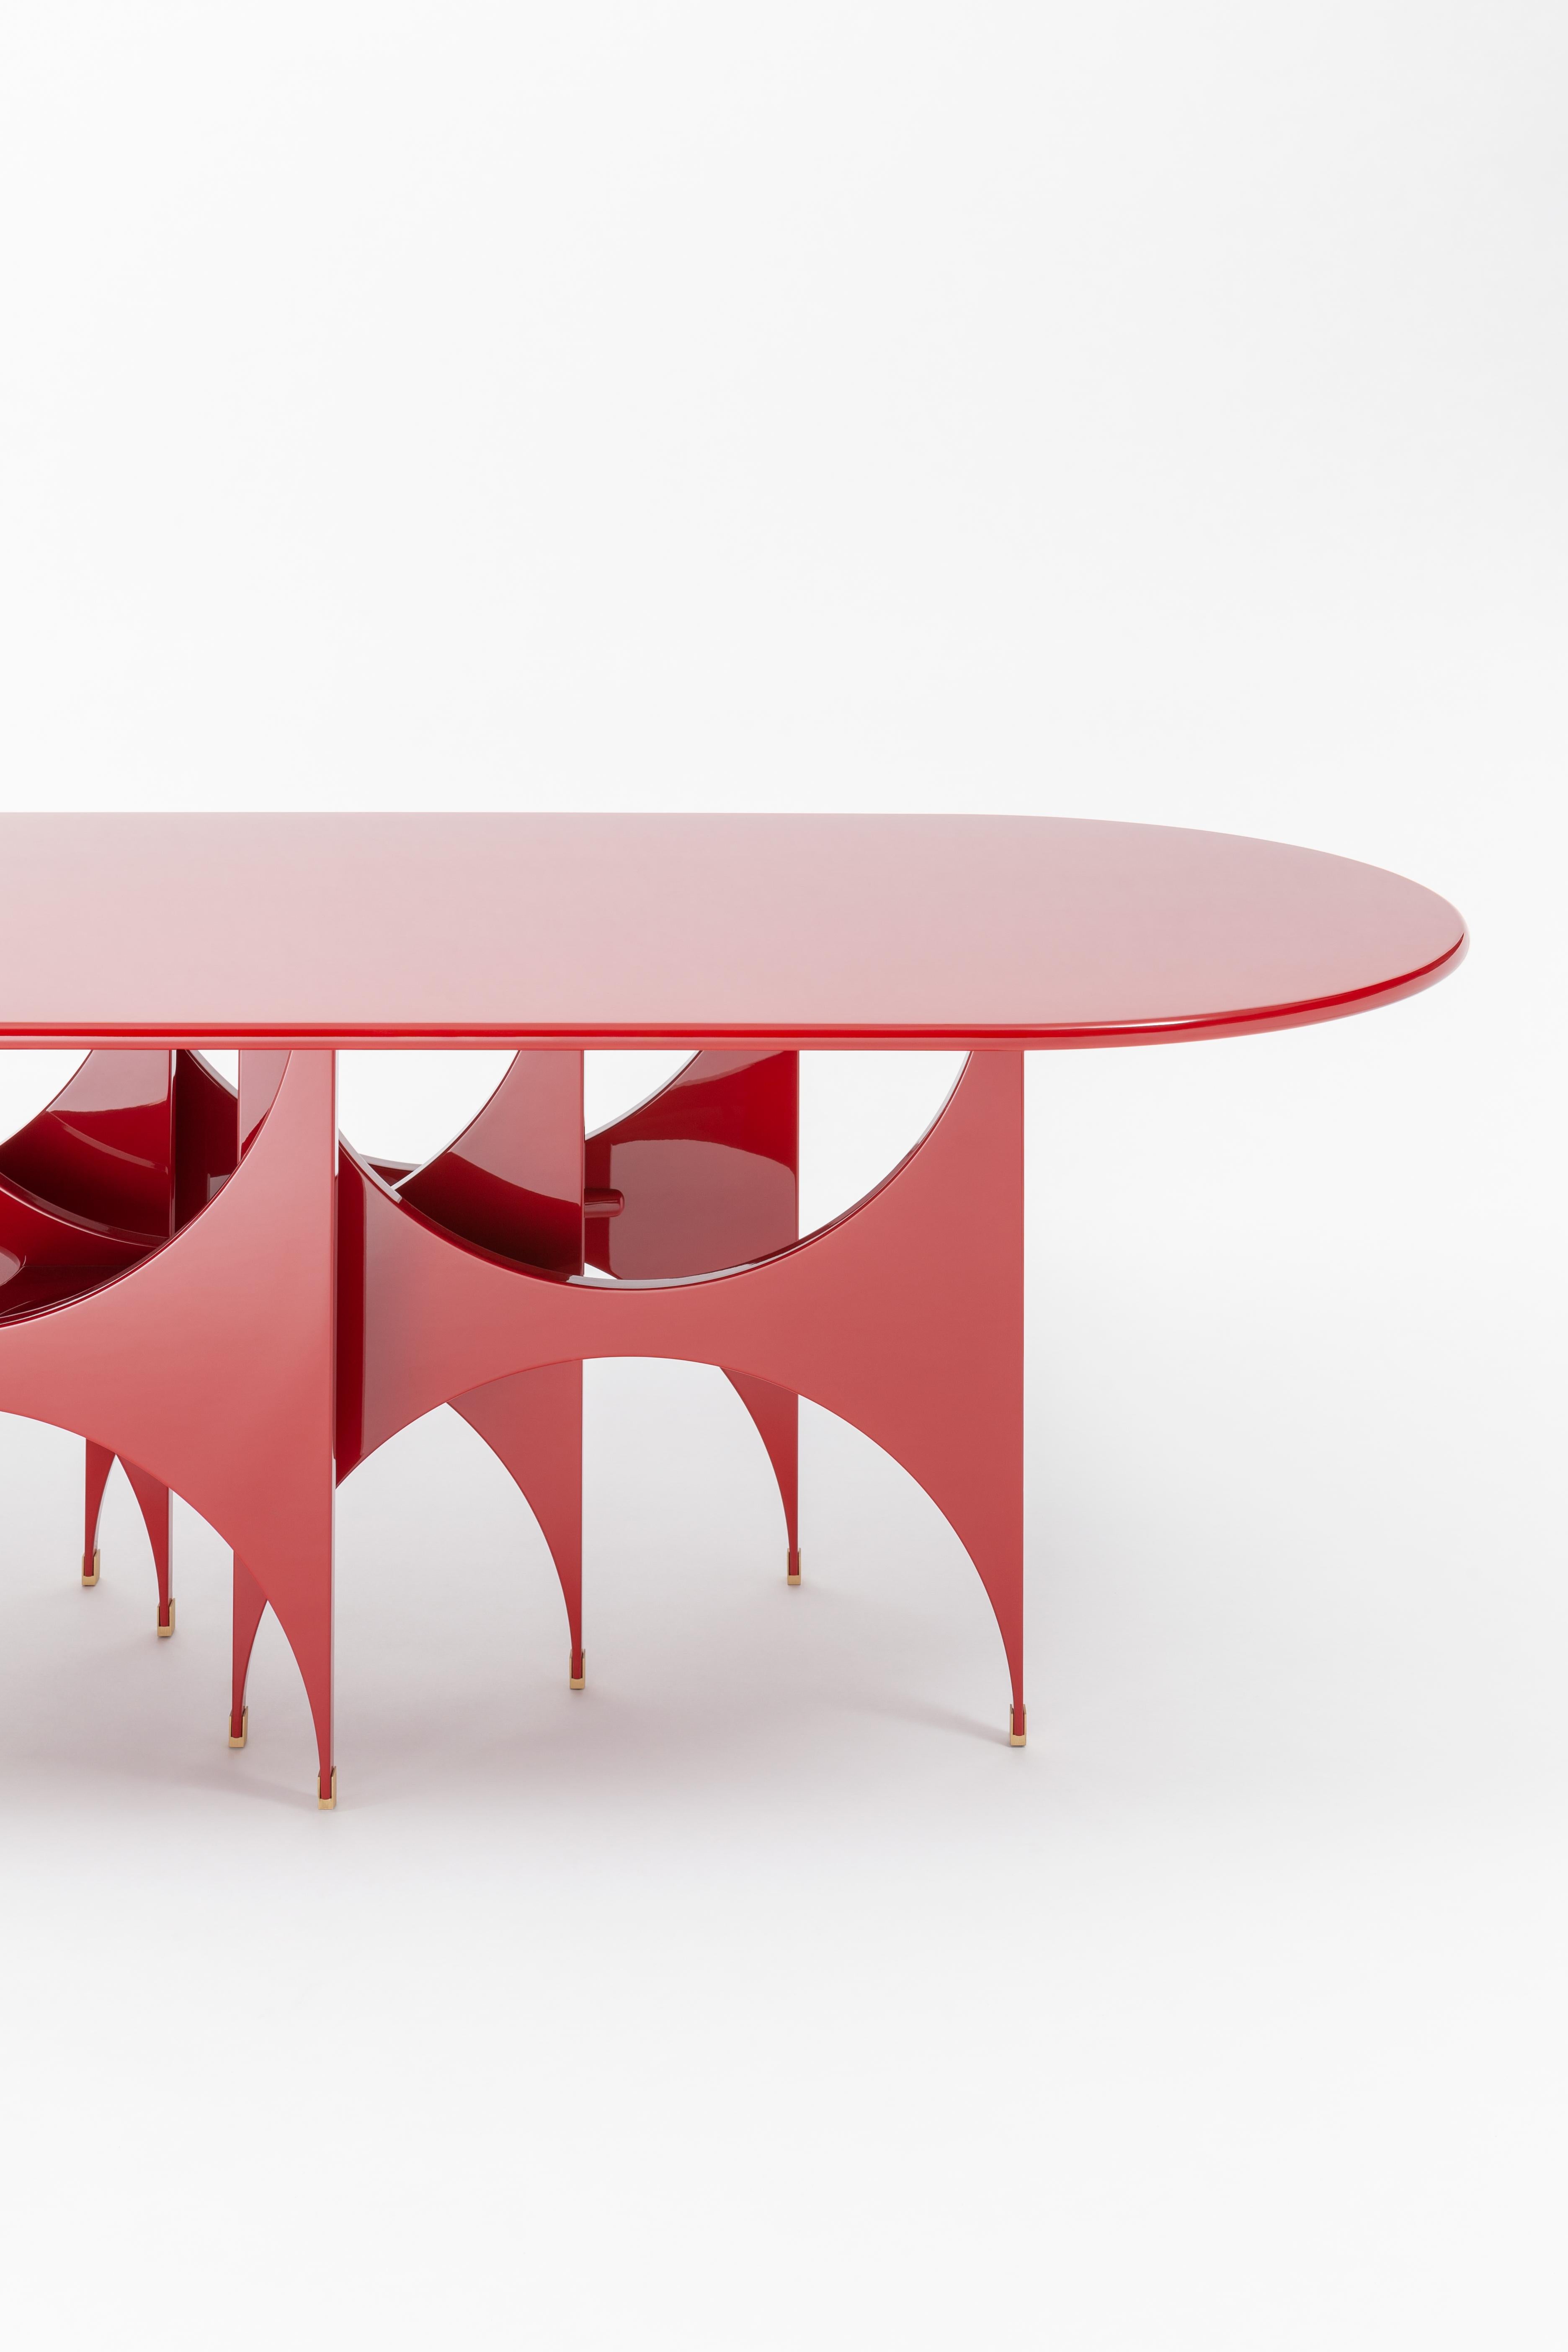 Italian Butterfly Oblong Table by SEM For Sale